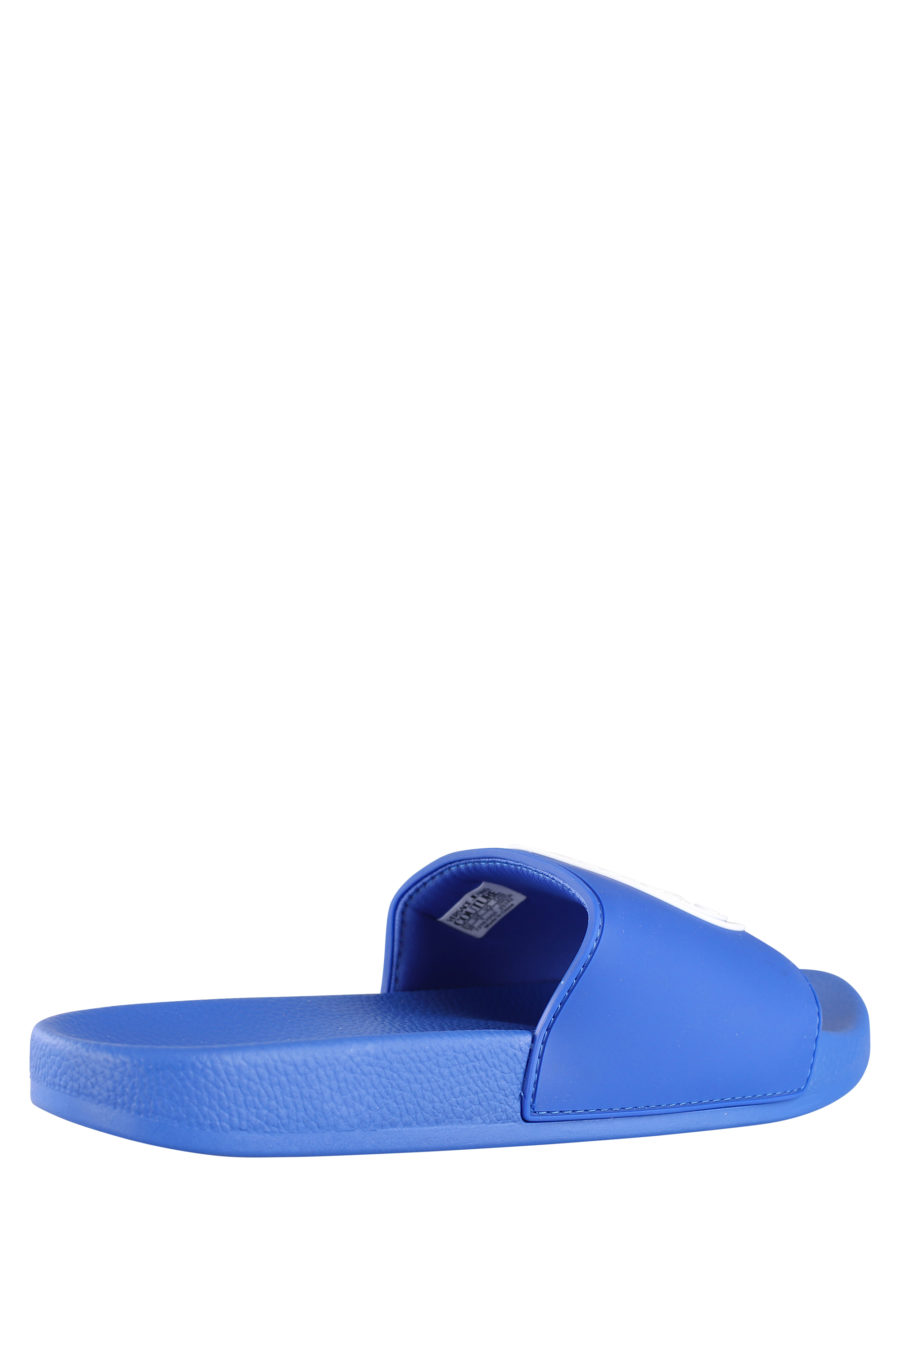 Blaue Flip Flops mit Kreislogo - IMG 9666